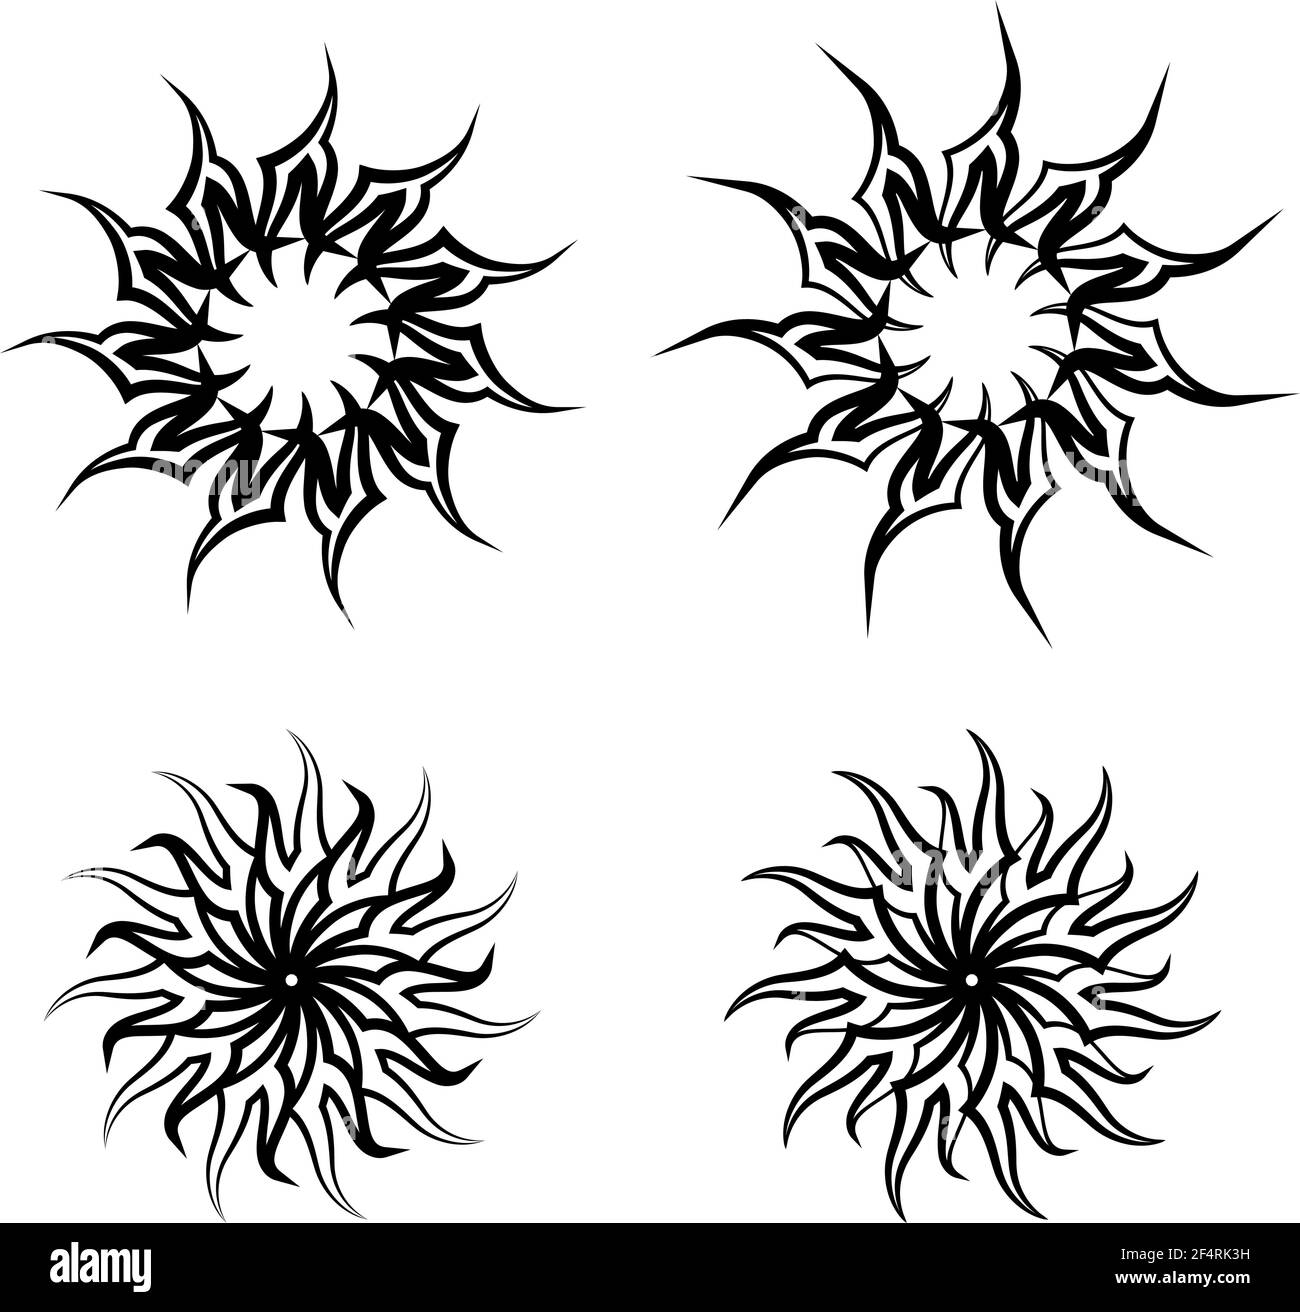 Image Details ISS_8859_18762 - Tribal Tattoo Sun, Flame Tribal Design  Vector Illustration